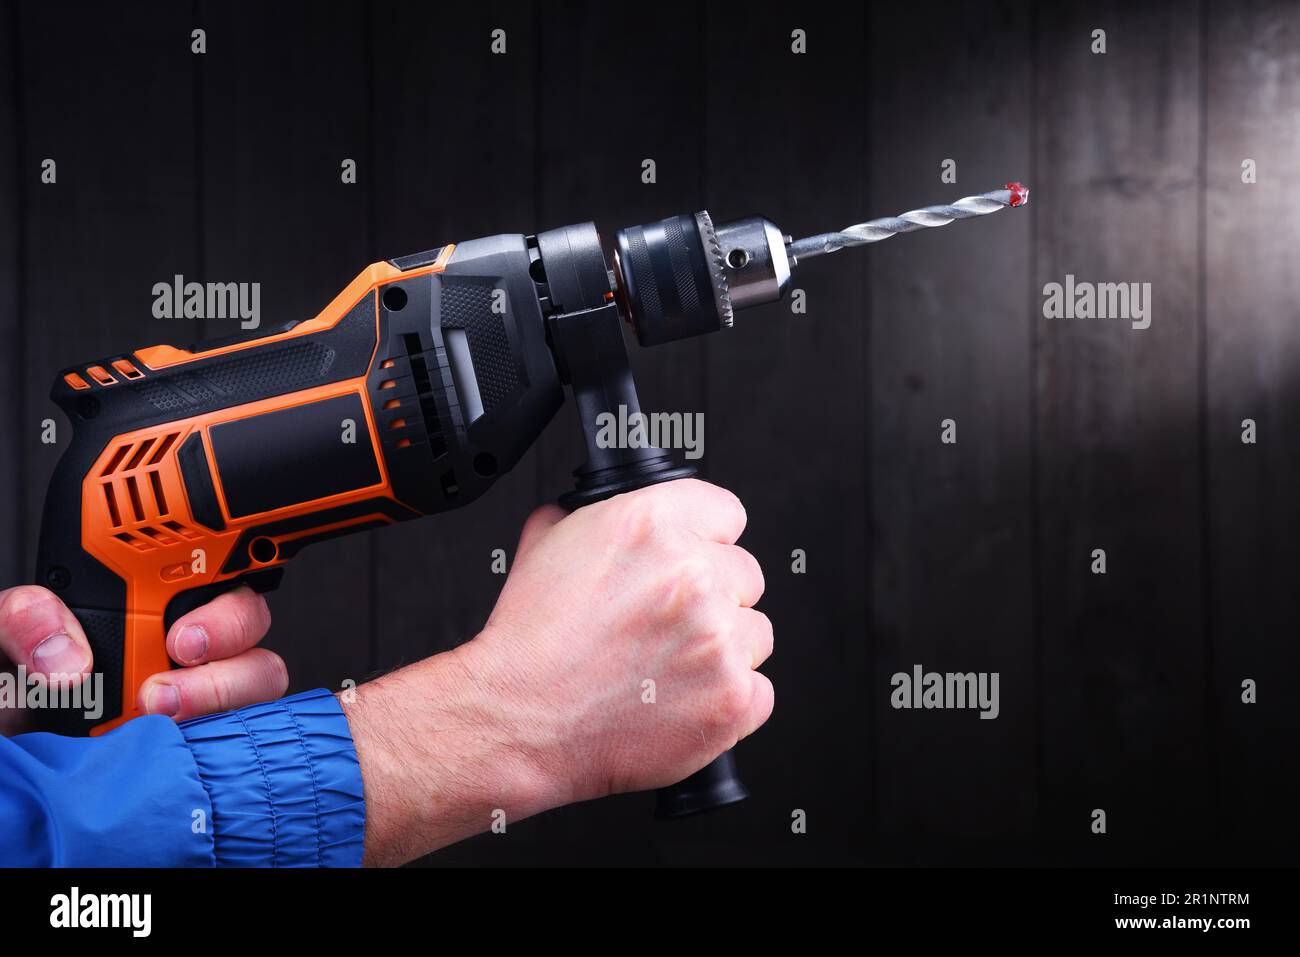 https://c8.alamy.com/comp/2R1NTRM/male-hands-holding-power-drill-2R1NTRM.jpg